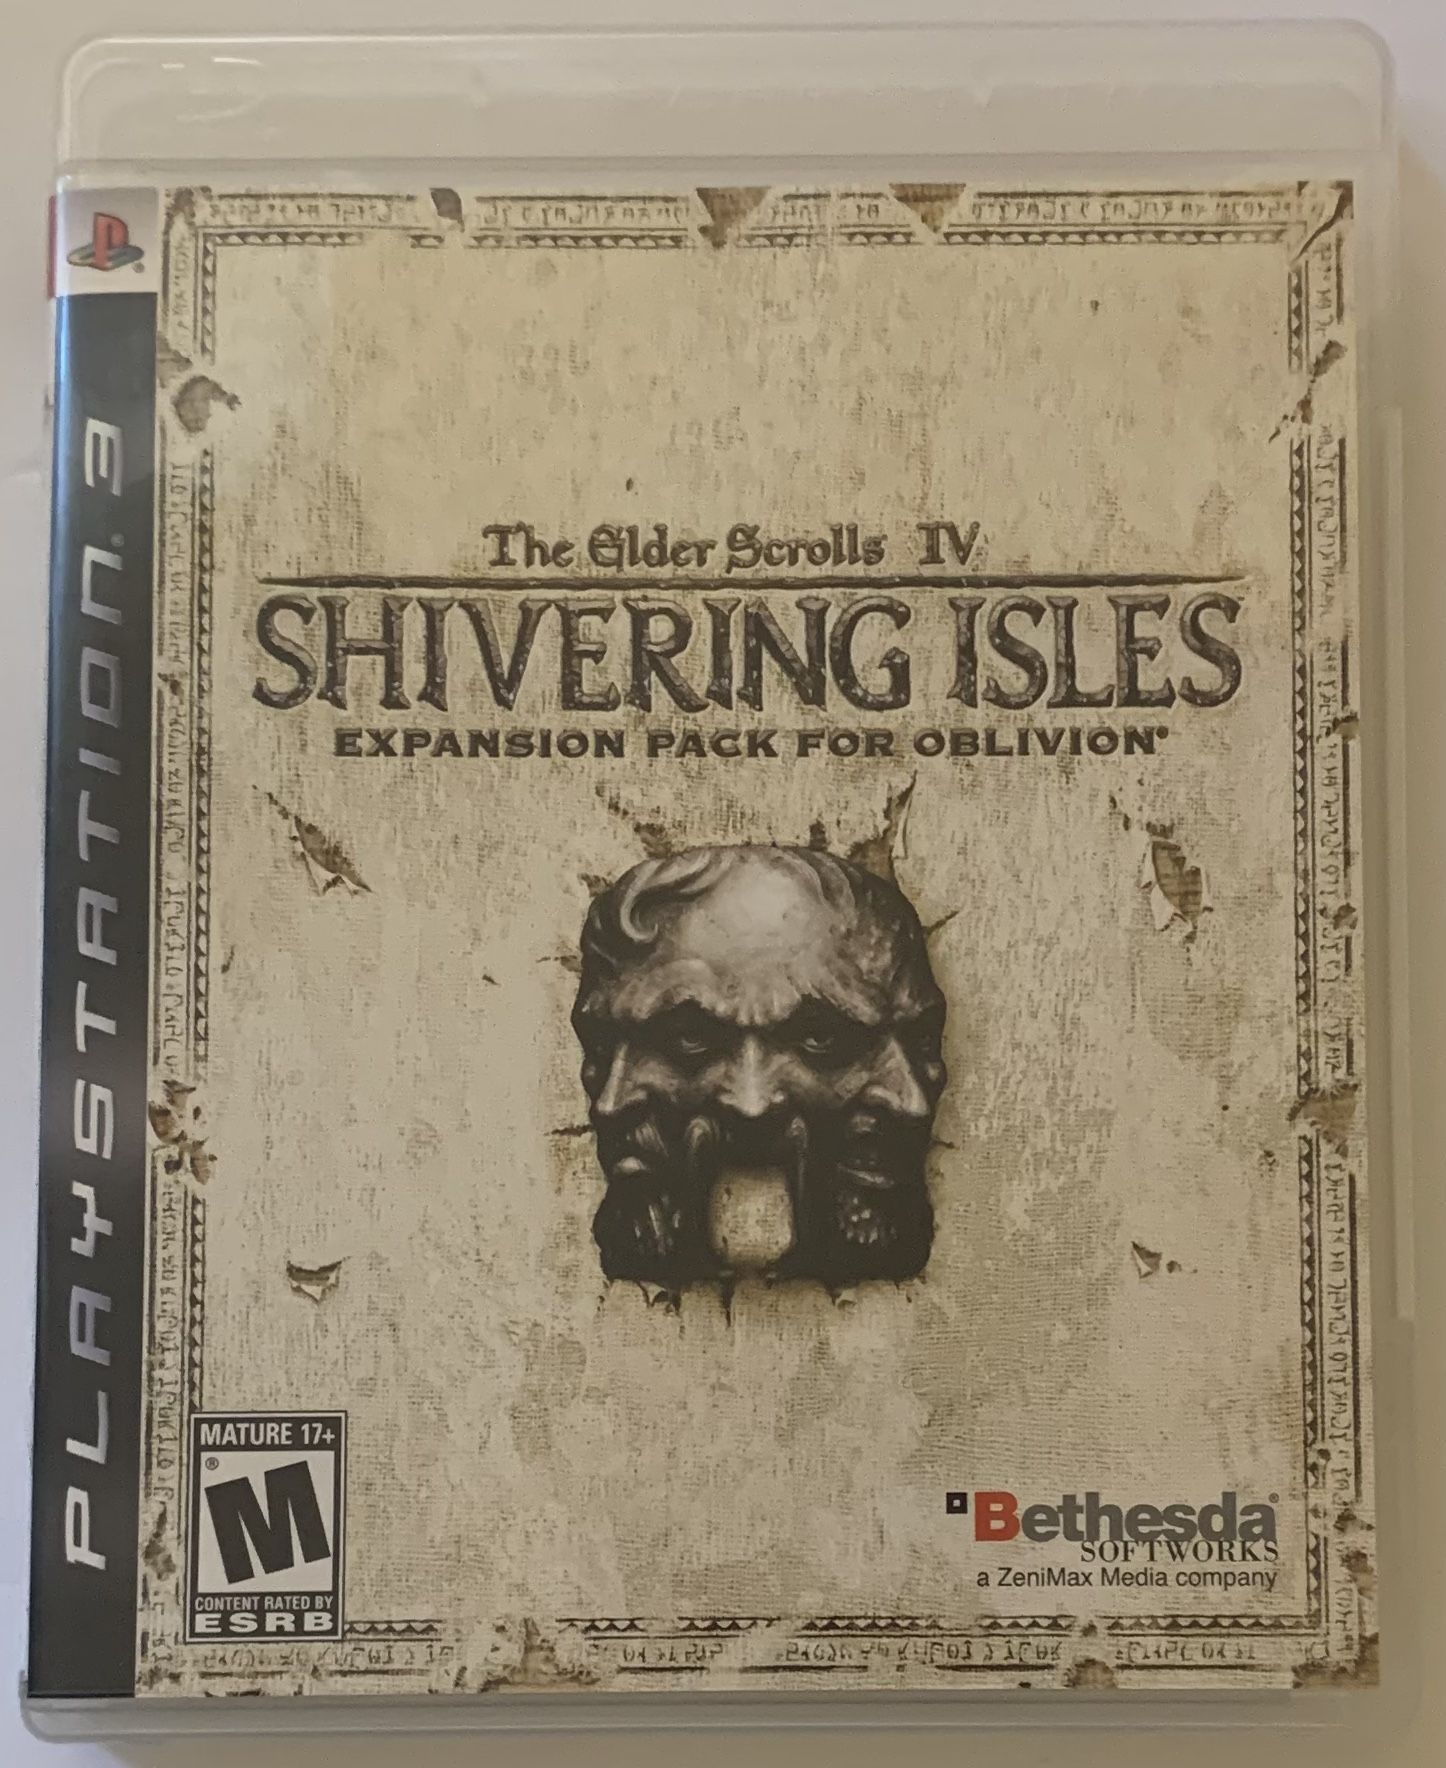 ES4 Shivering Isles DLC For Oblivion PS3